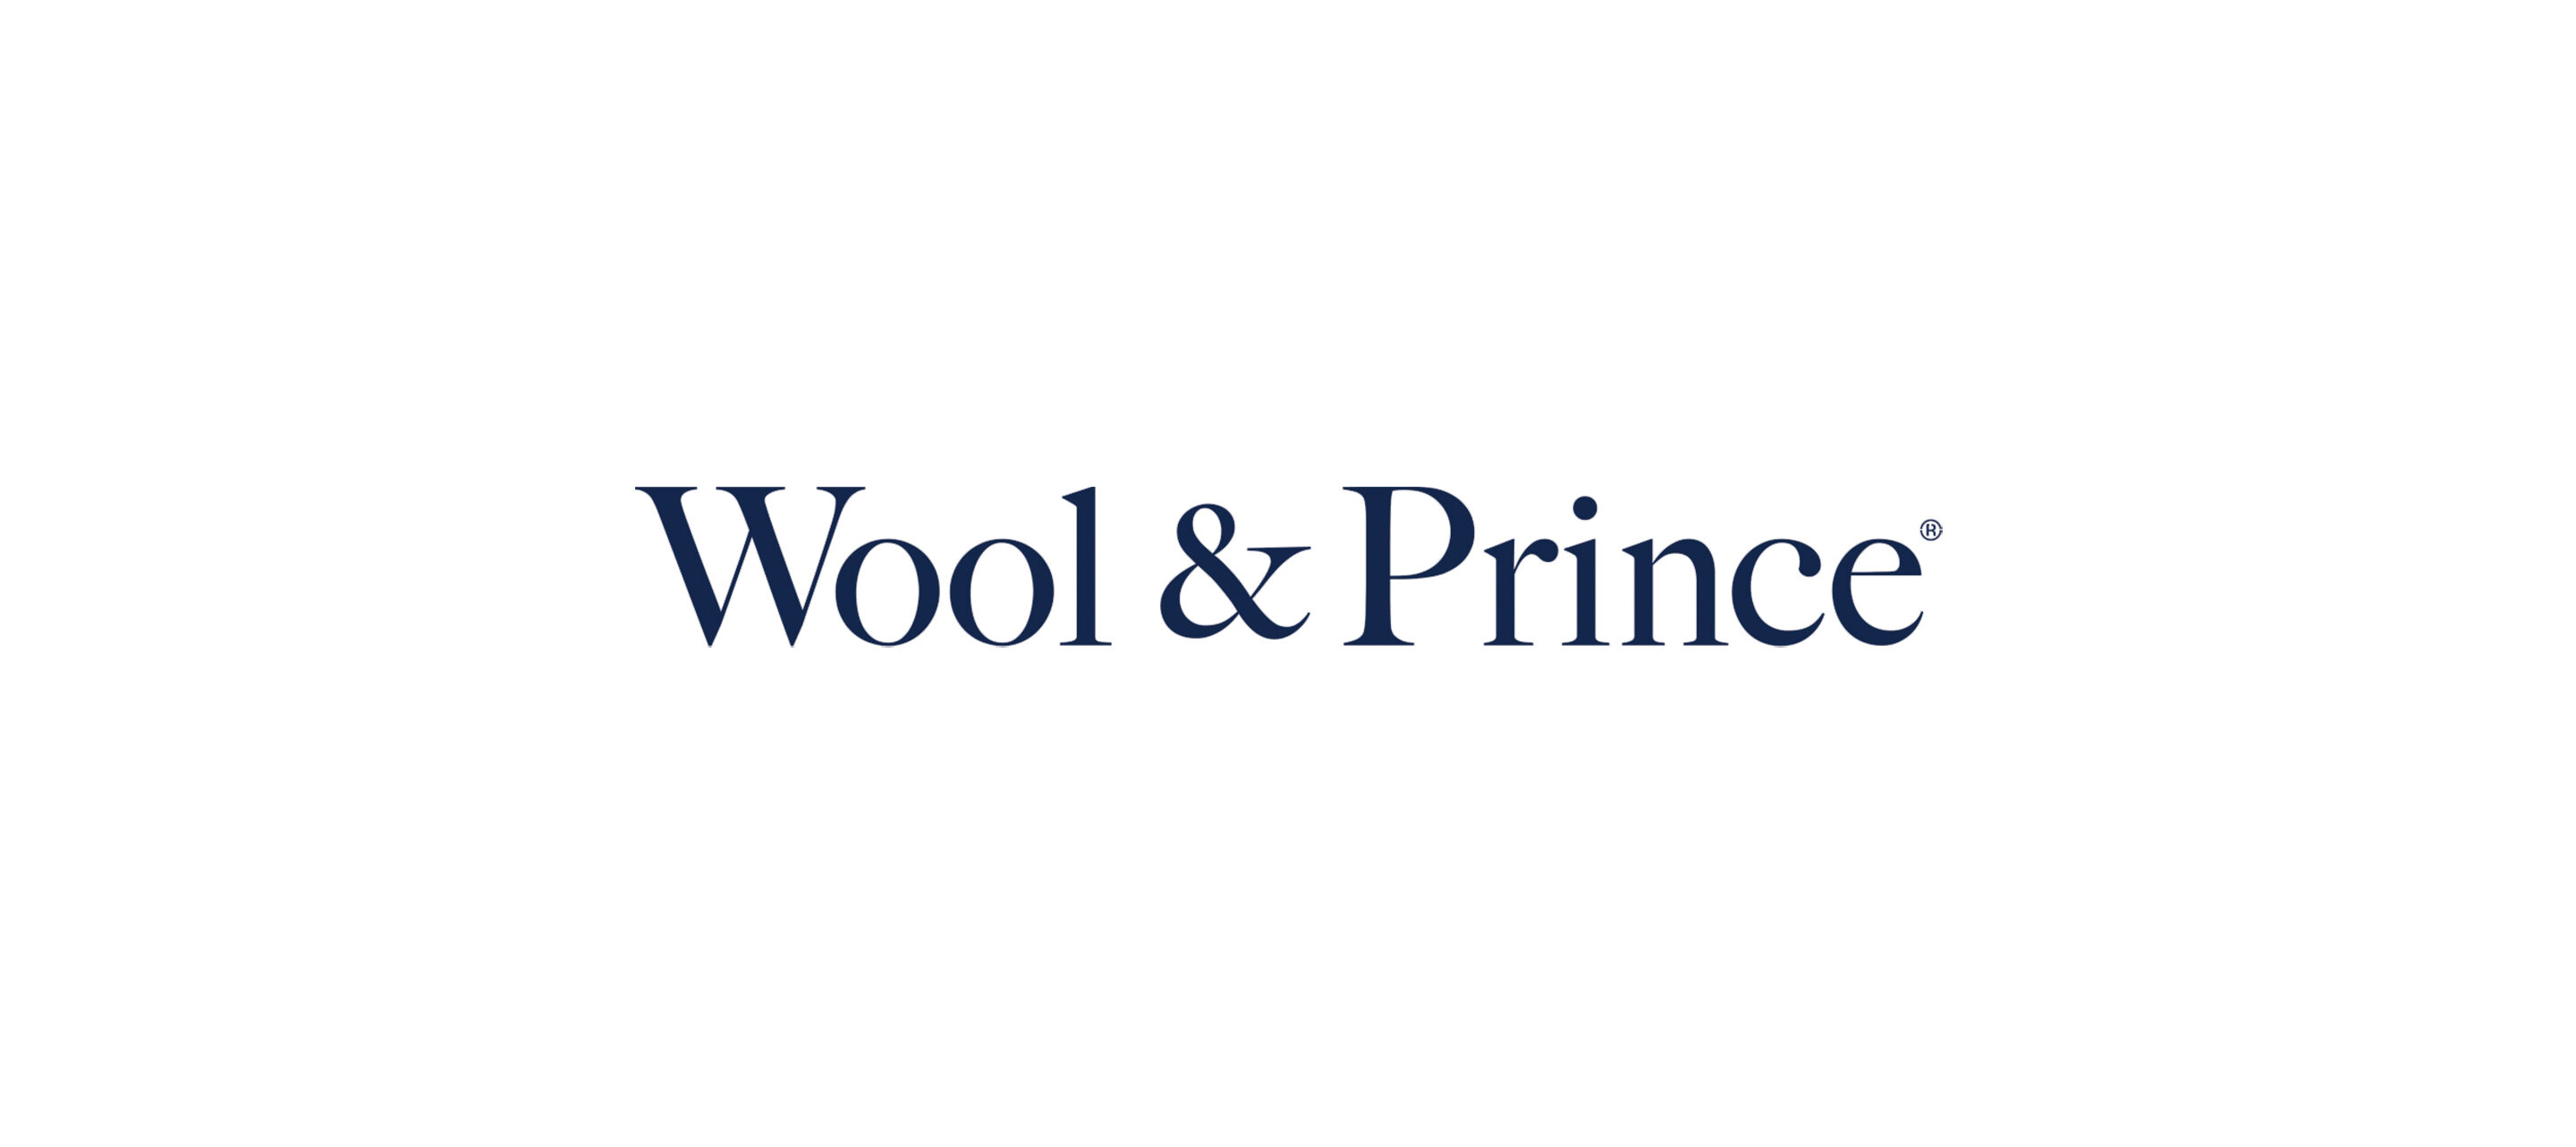 woolprince_logo